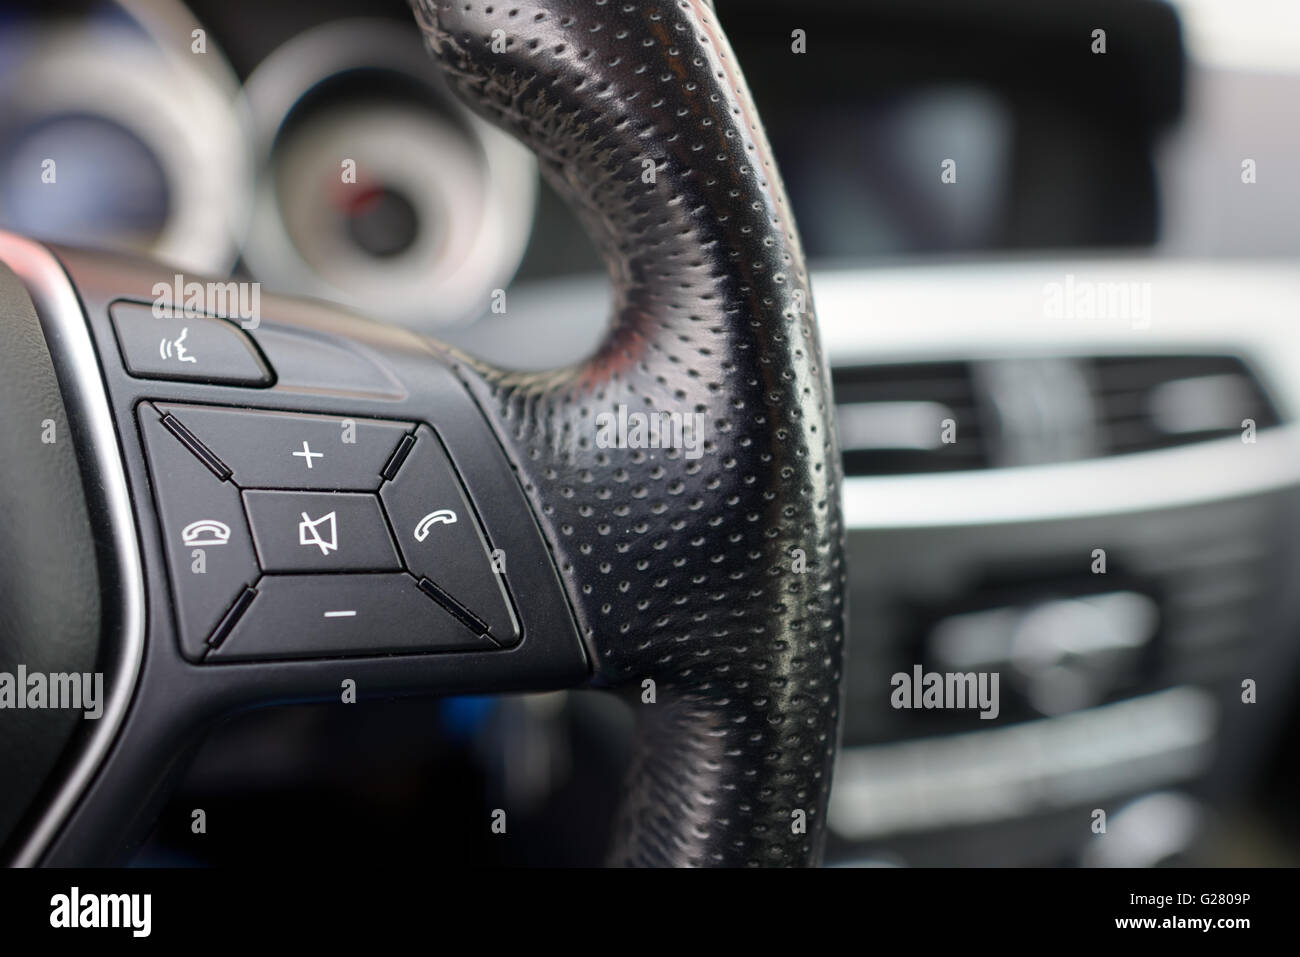 Steering wheel of modern car, details of phone adjustment controls Stock Photo